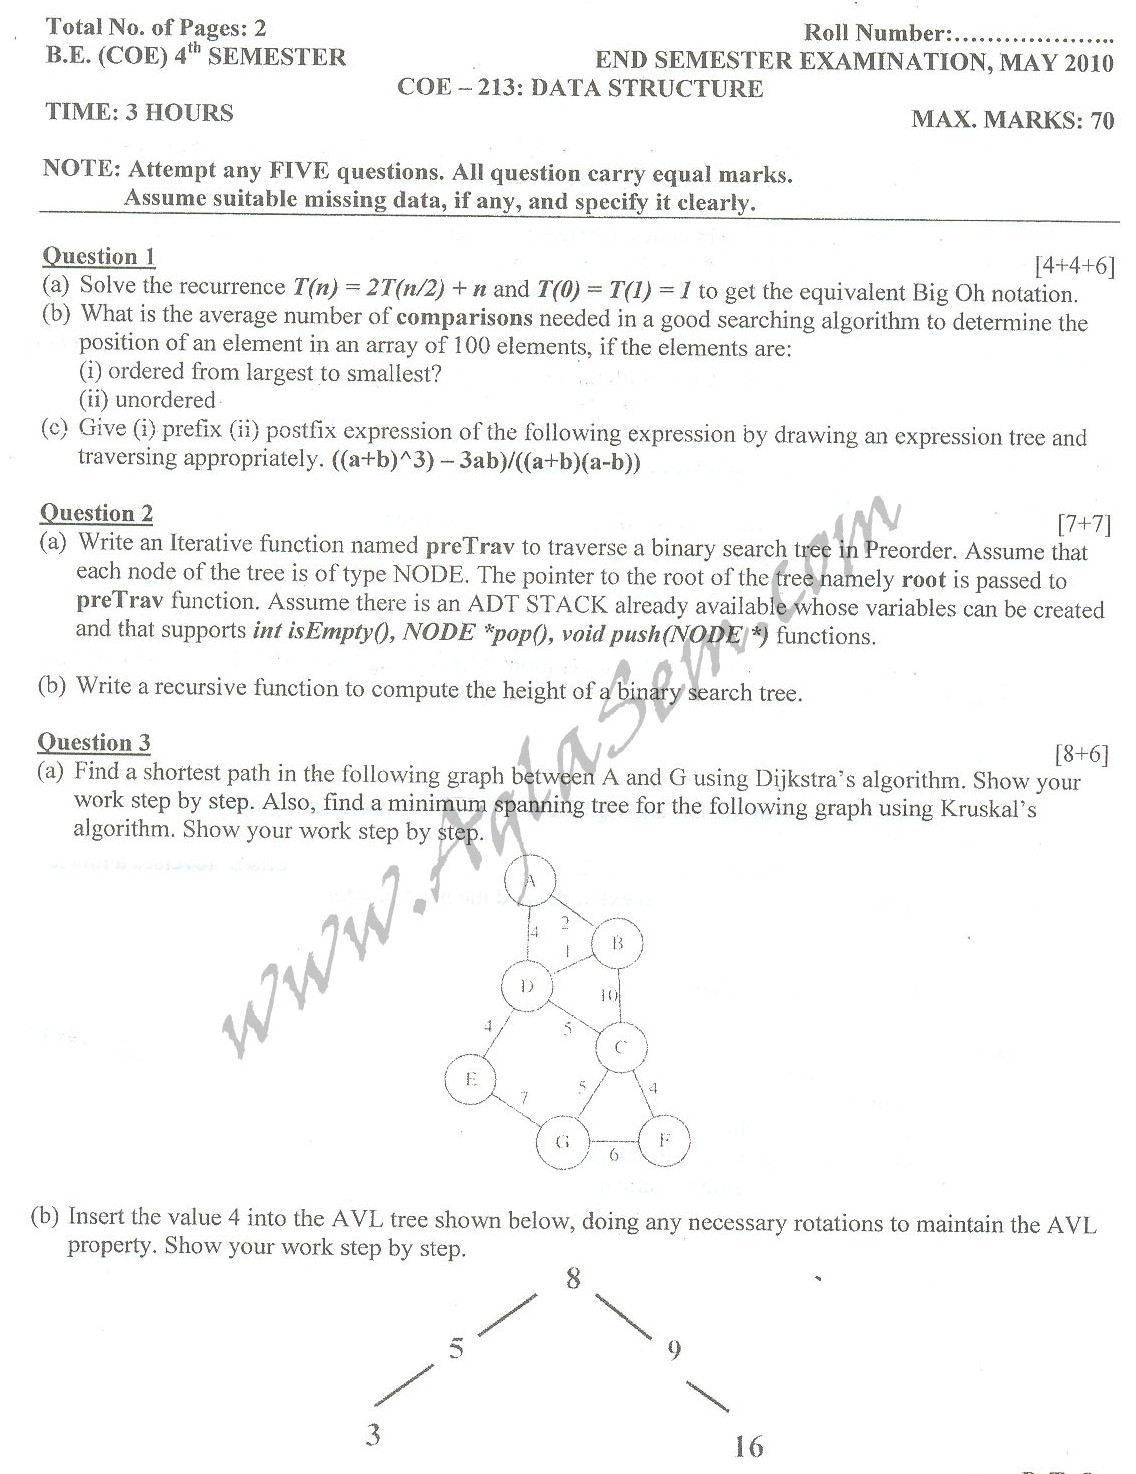 DTU Question Papers 2010 – 4 Semester - End  Sem - COE-213